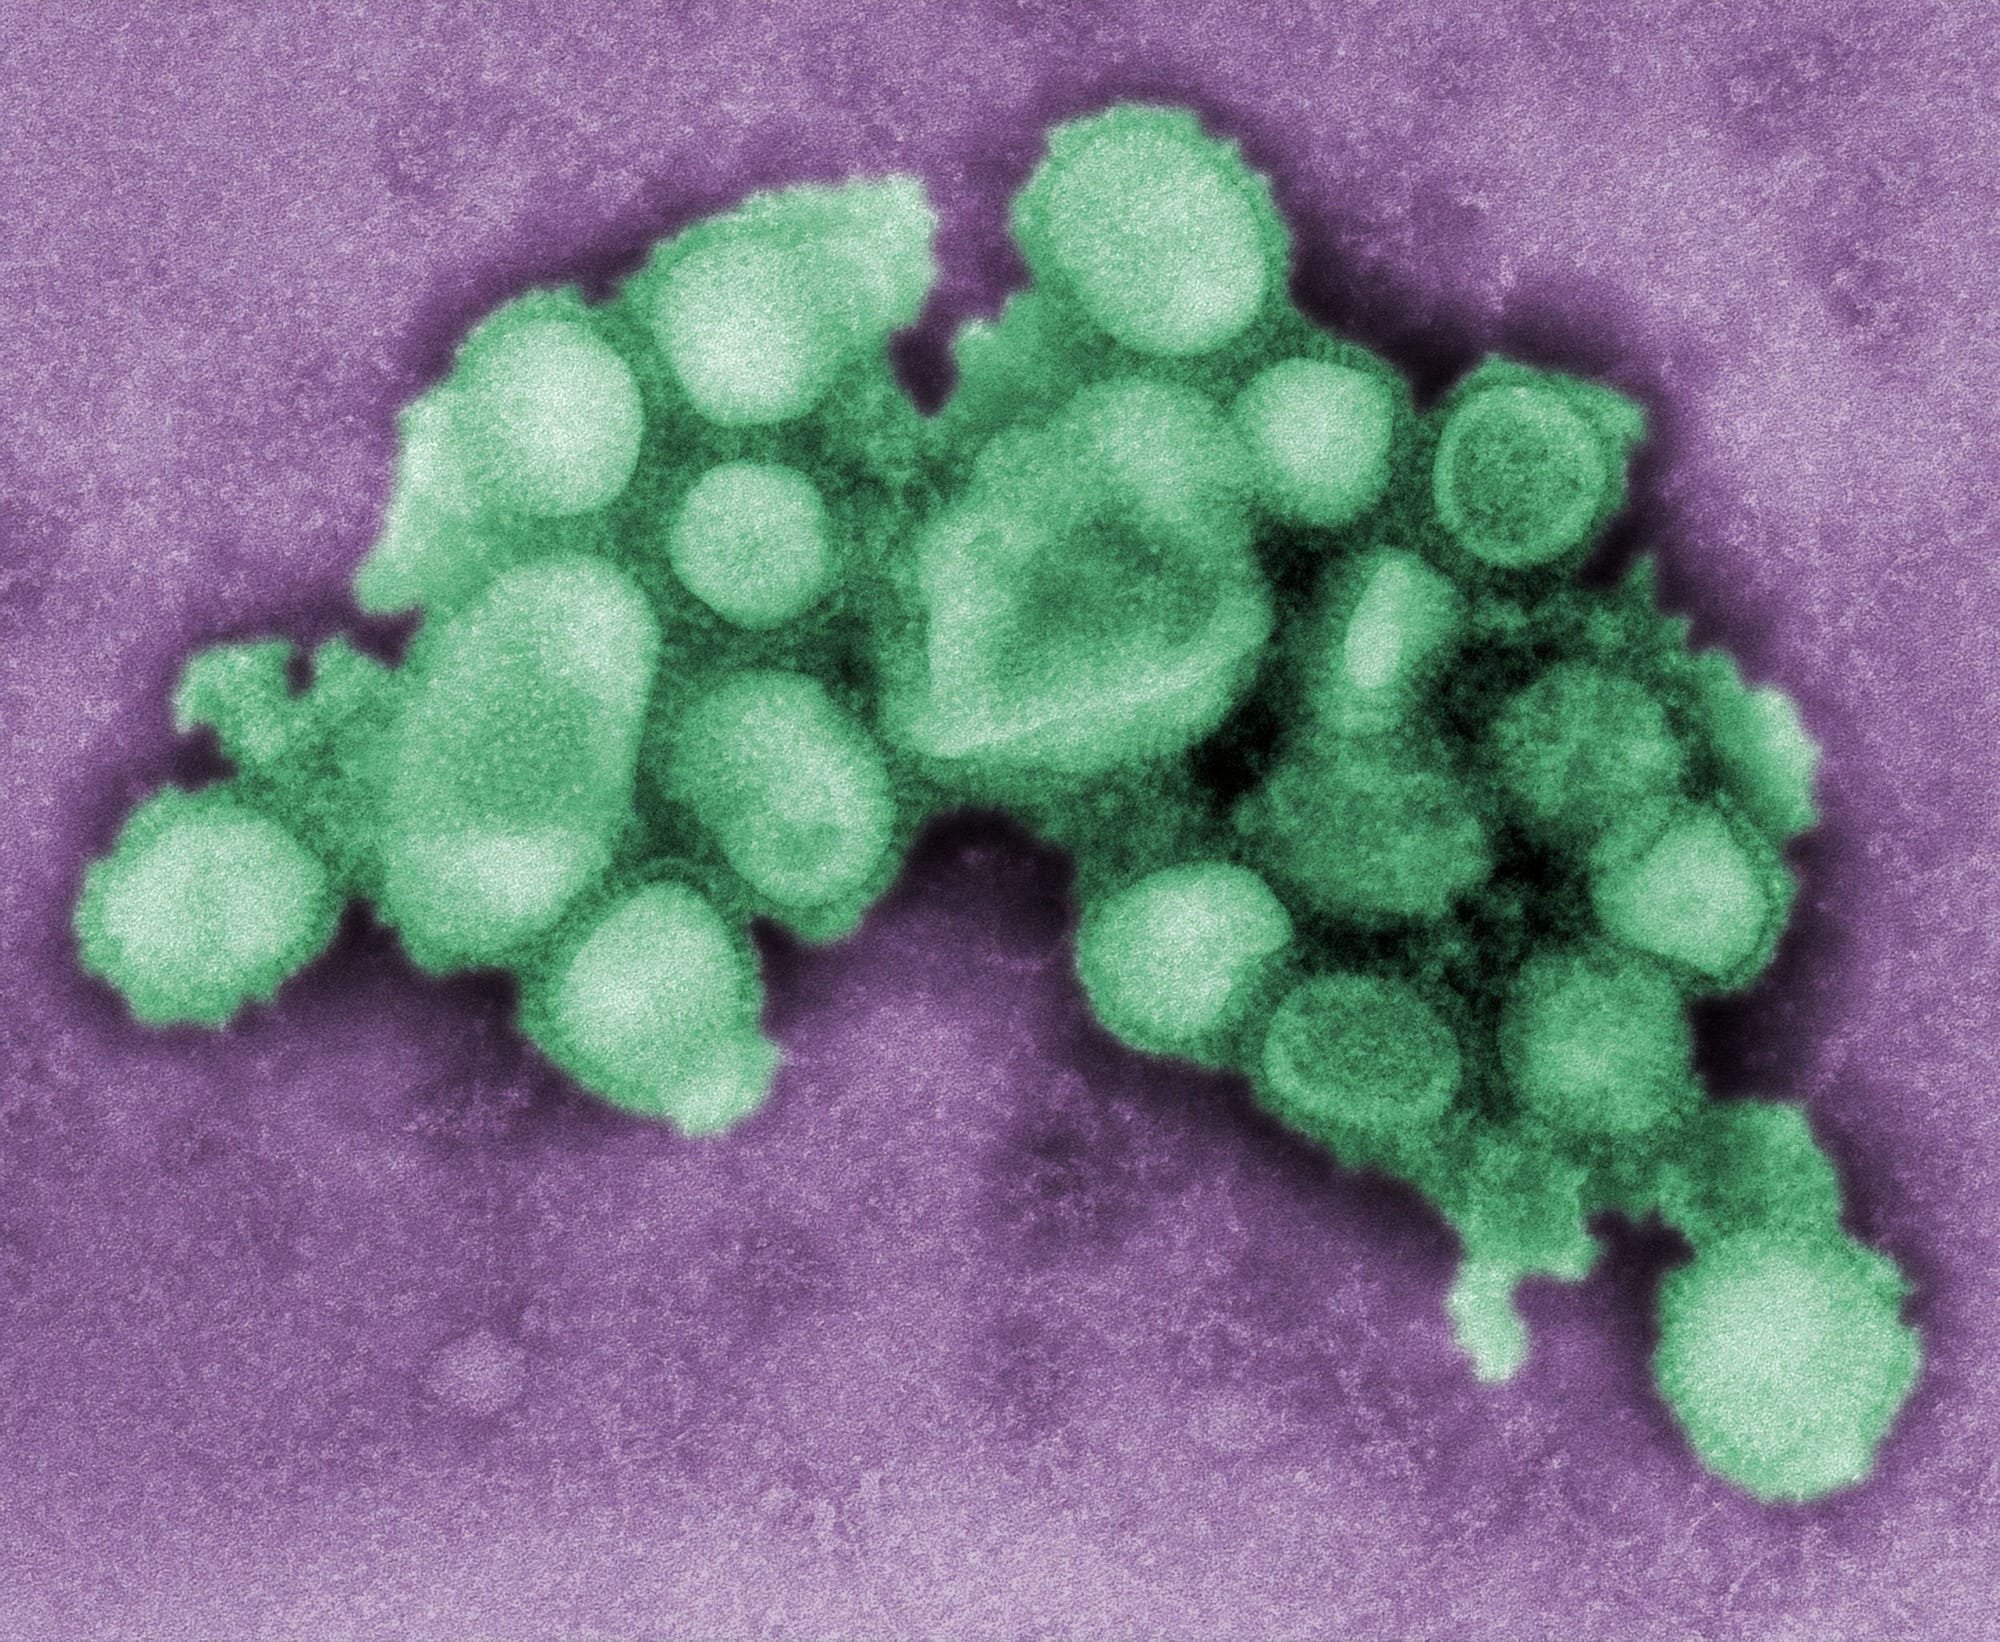 New England Journal of Medicine: Coronavirus Could Be No Worse than Flu.